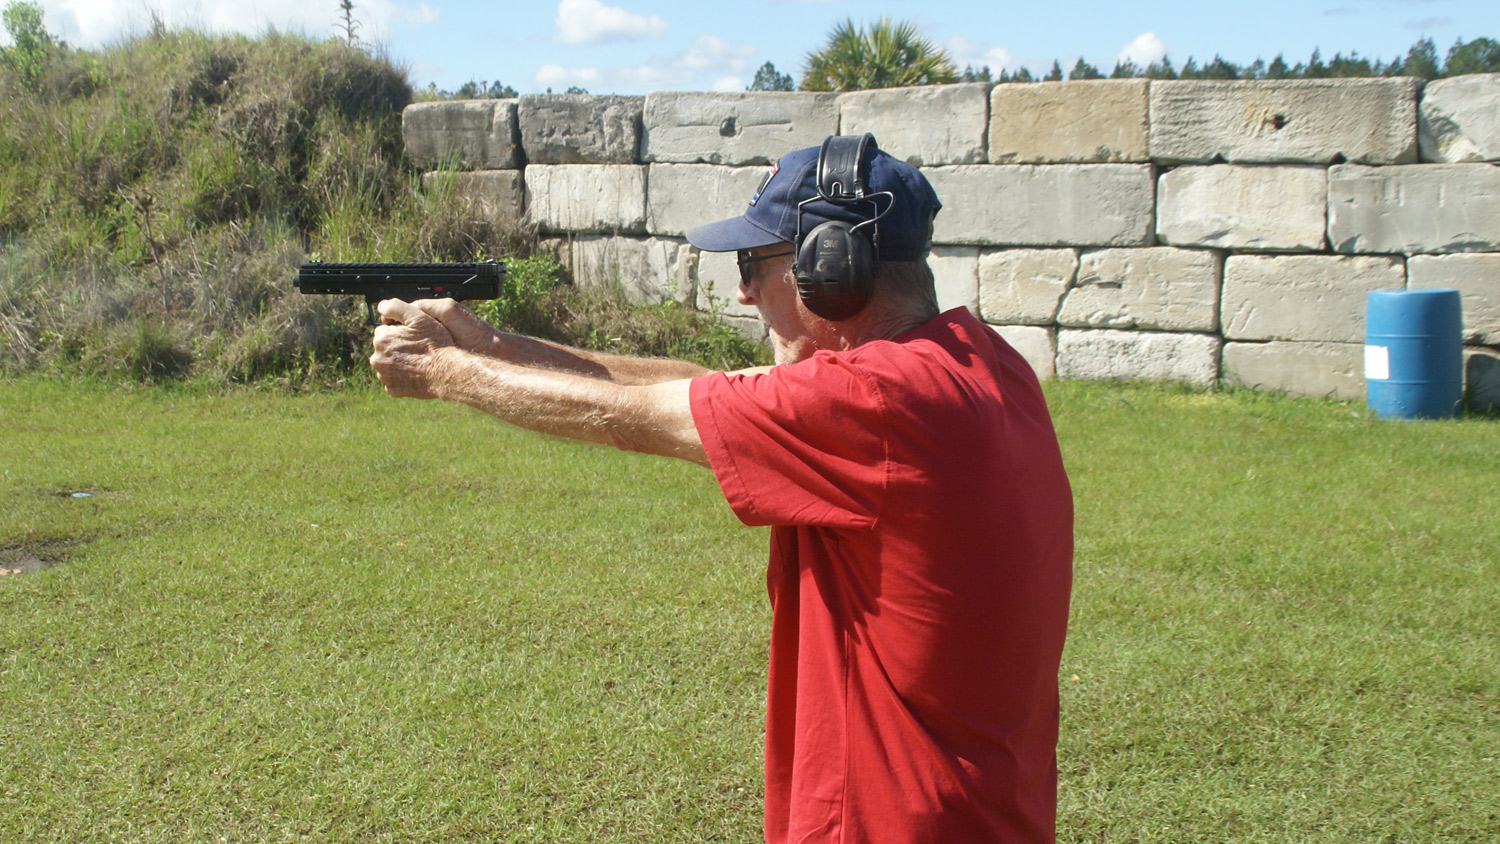 Chris Christian shooting the Kel-Tec CP33 Competition Pistol